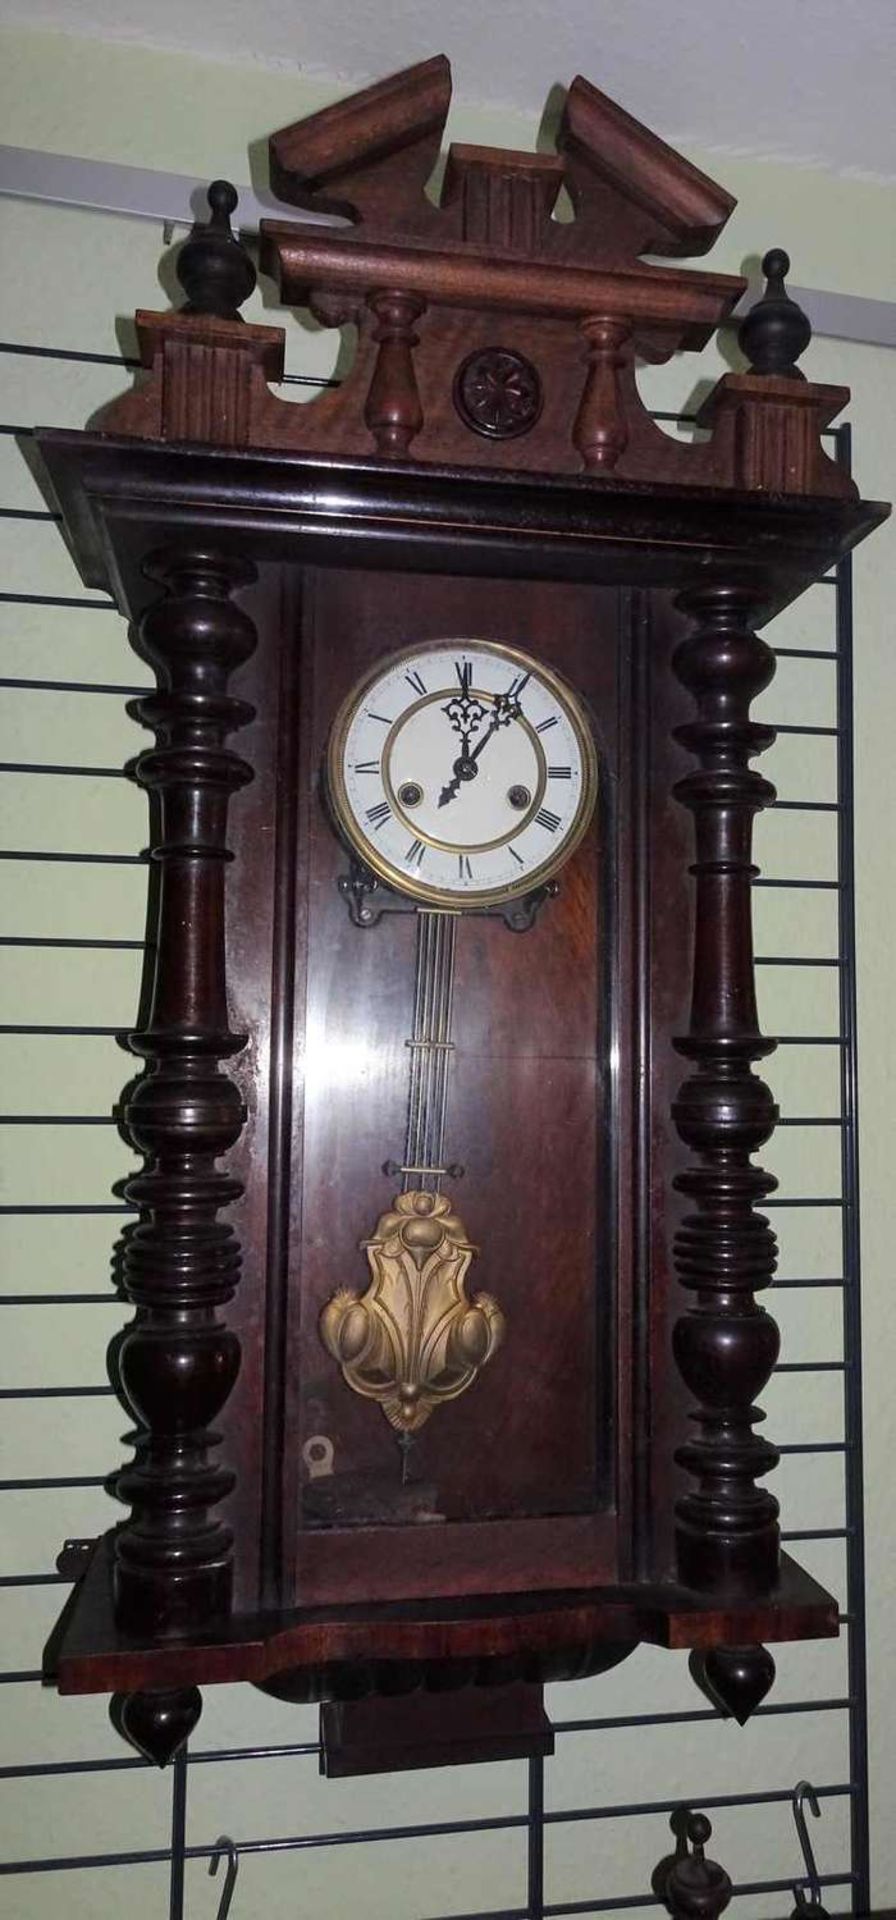 Wilhelminian style wall clock, with elaborate attachment, beautiful pendulum, dimensions